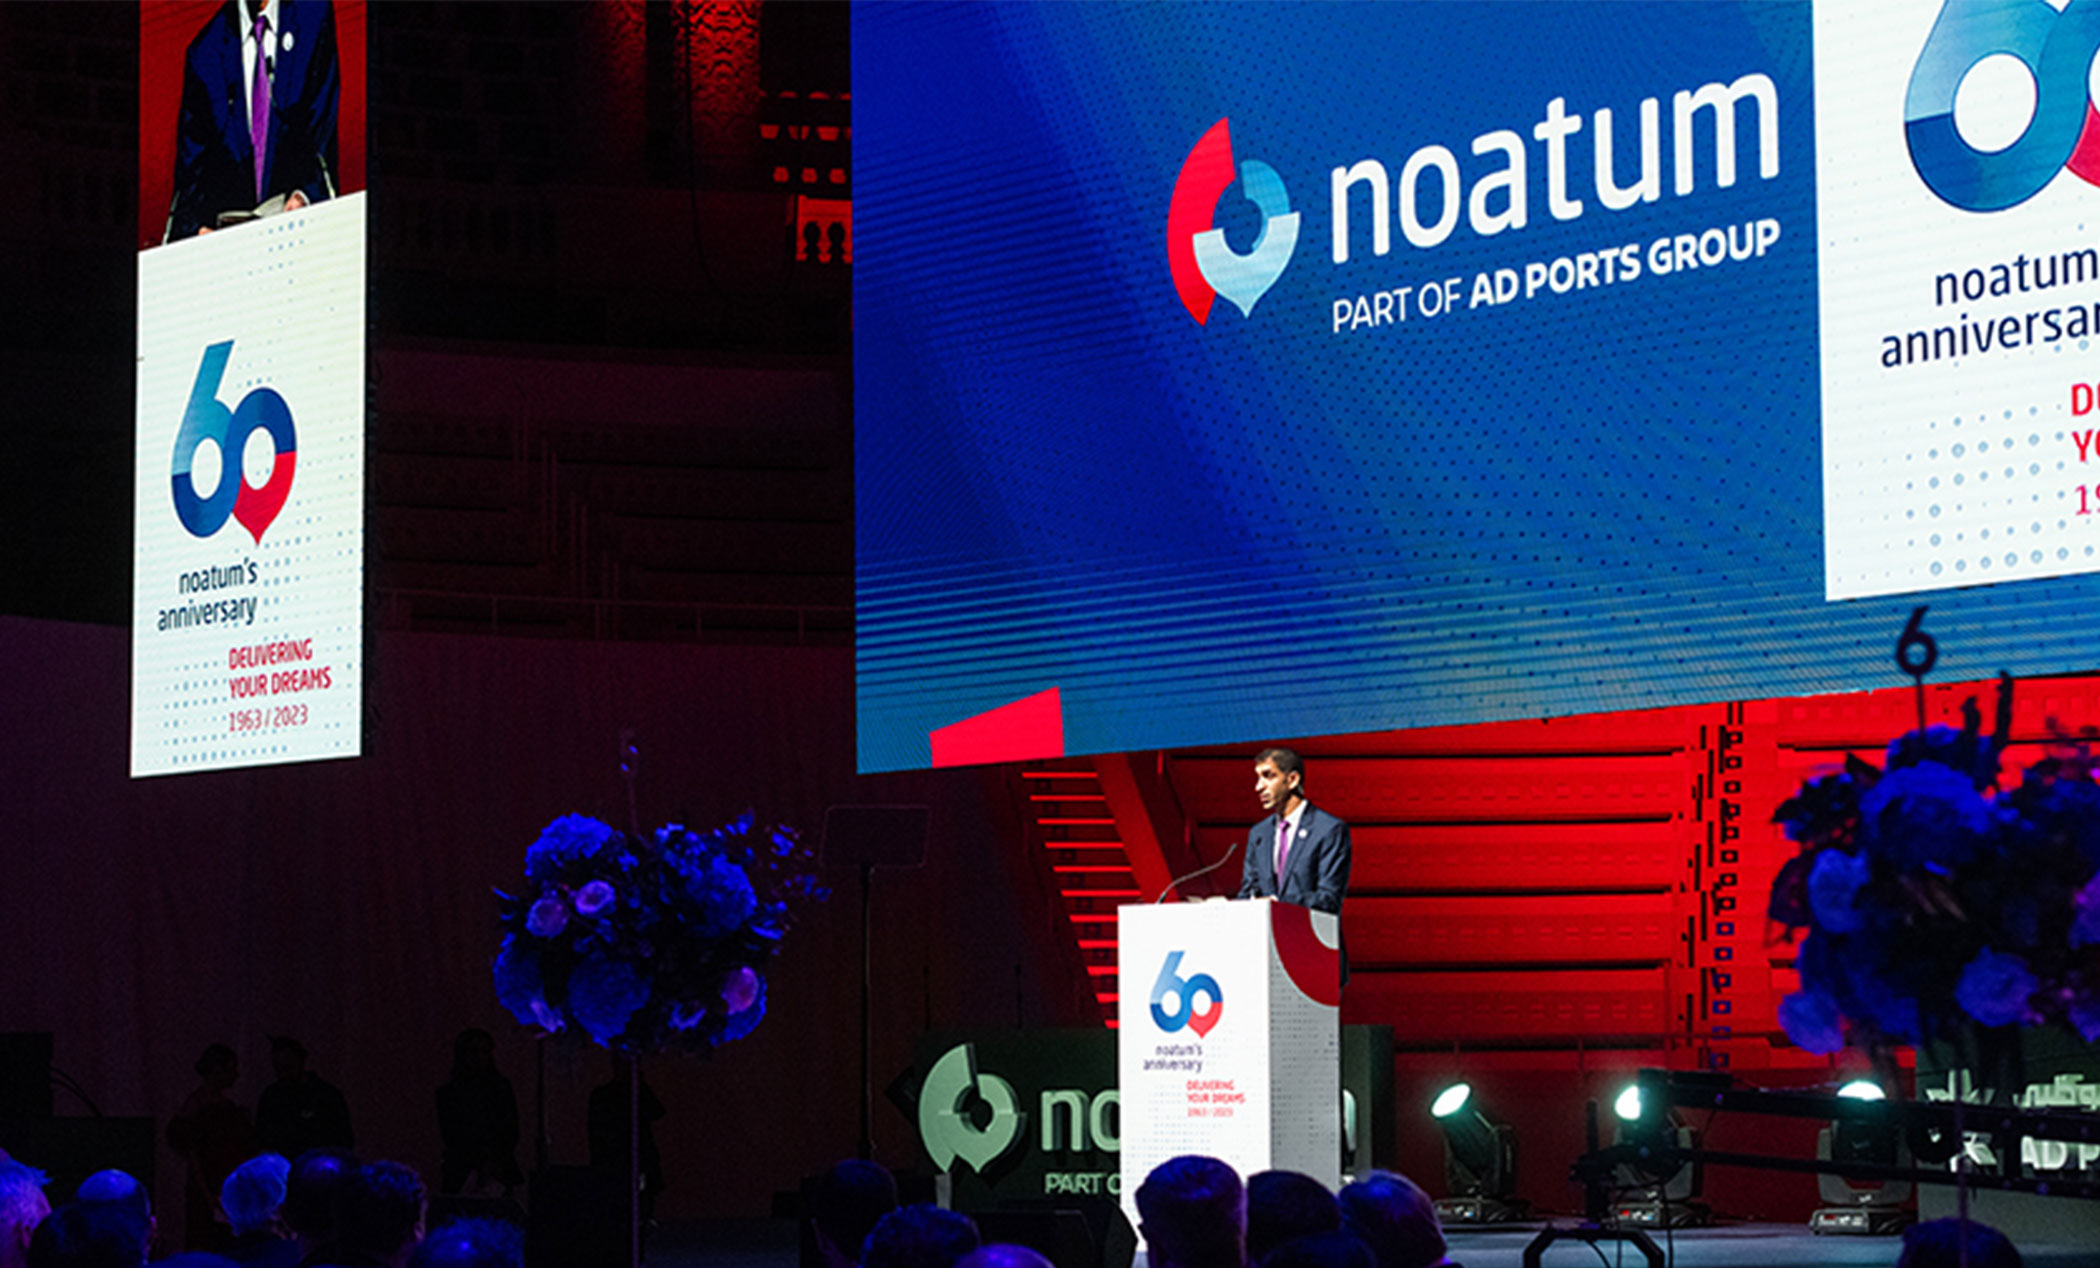 Noatum Celebrates Historic Sixtieth Anniversary with Global Industry Leaders